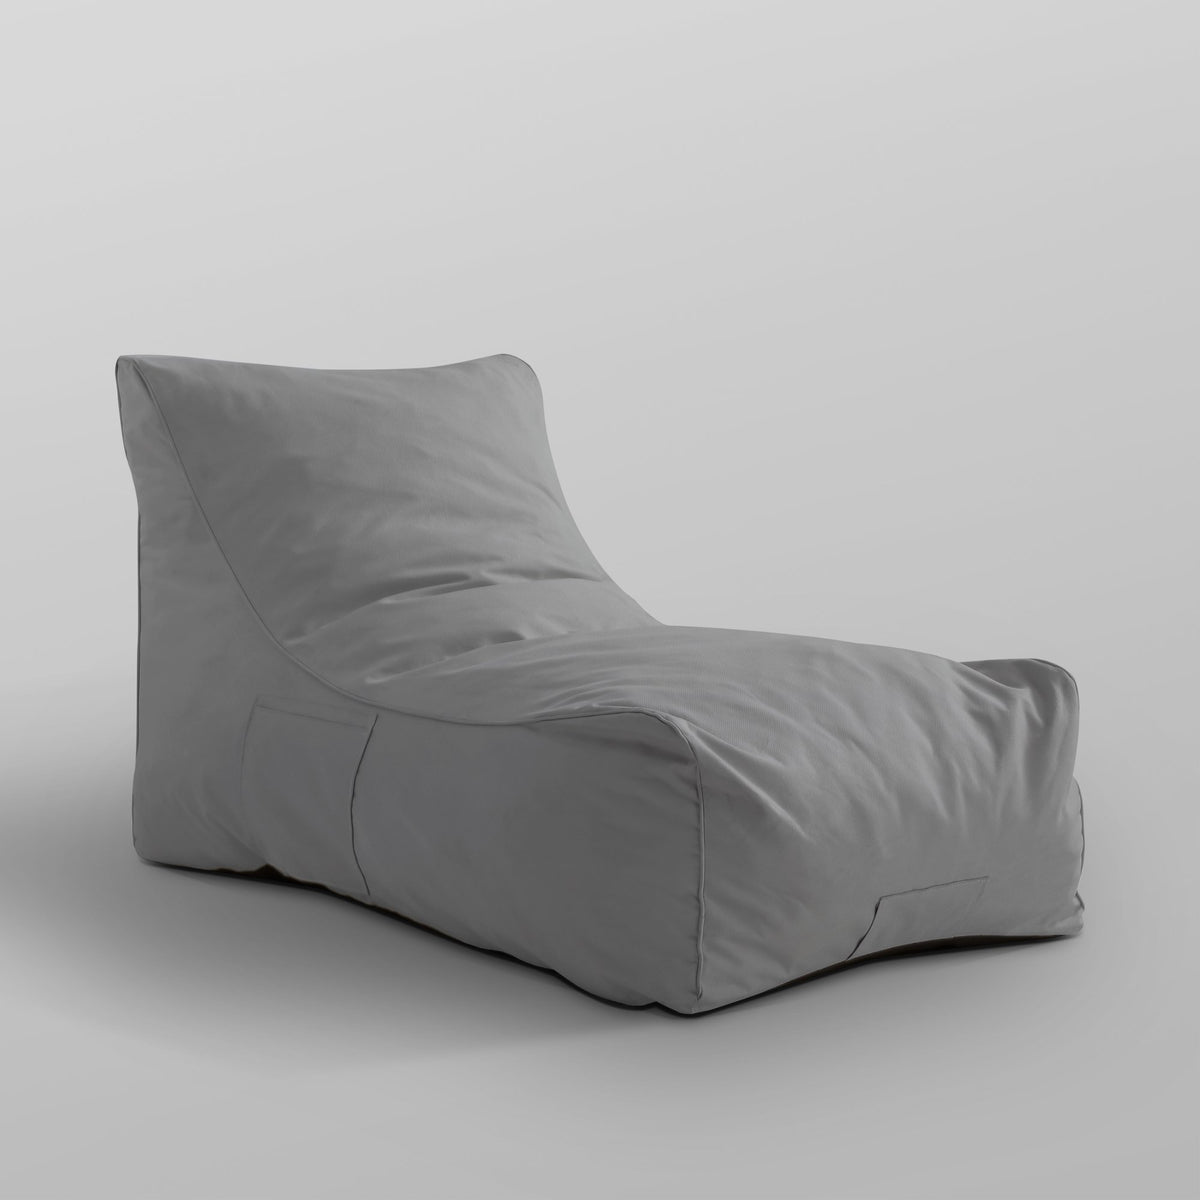 Loungie Cloudy Foam Lounge Chair-Convertible Bean Bag-Indoor- Outdoor-Self  Expanding-Water, 1 unit - Kroger